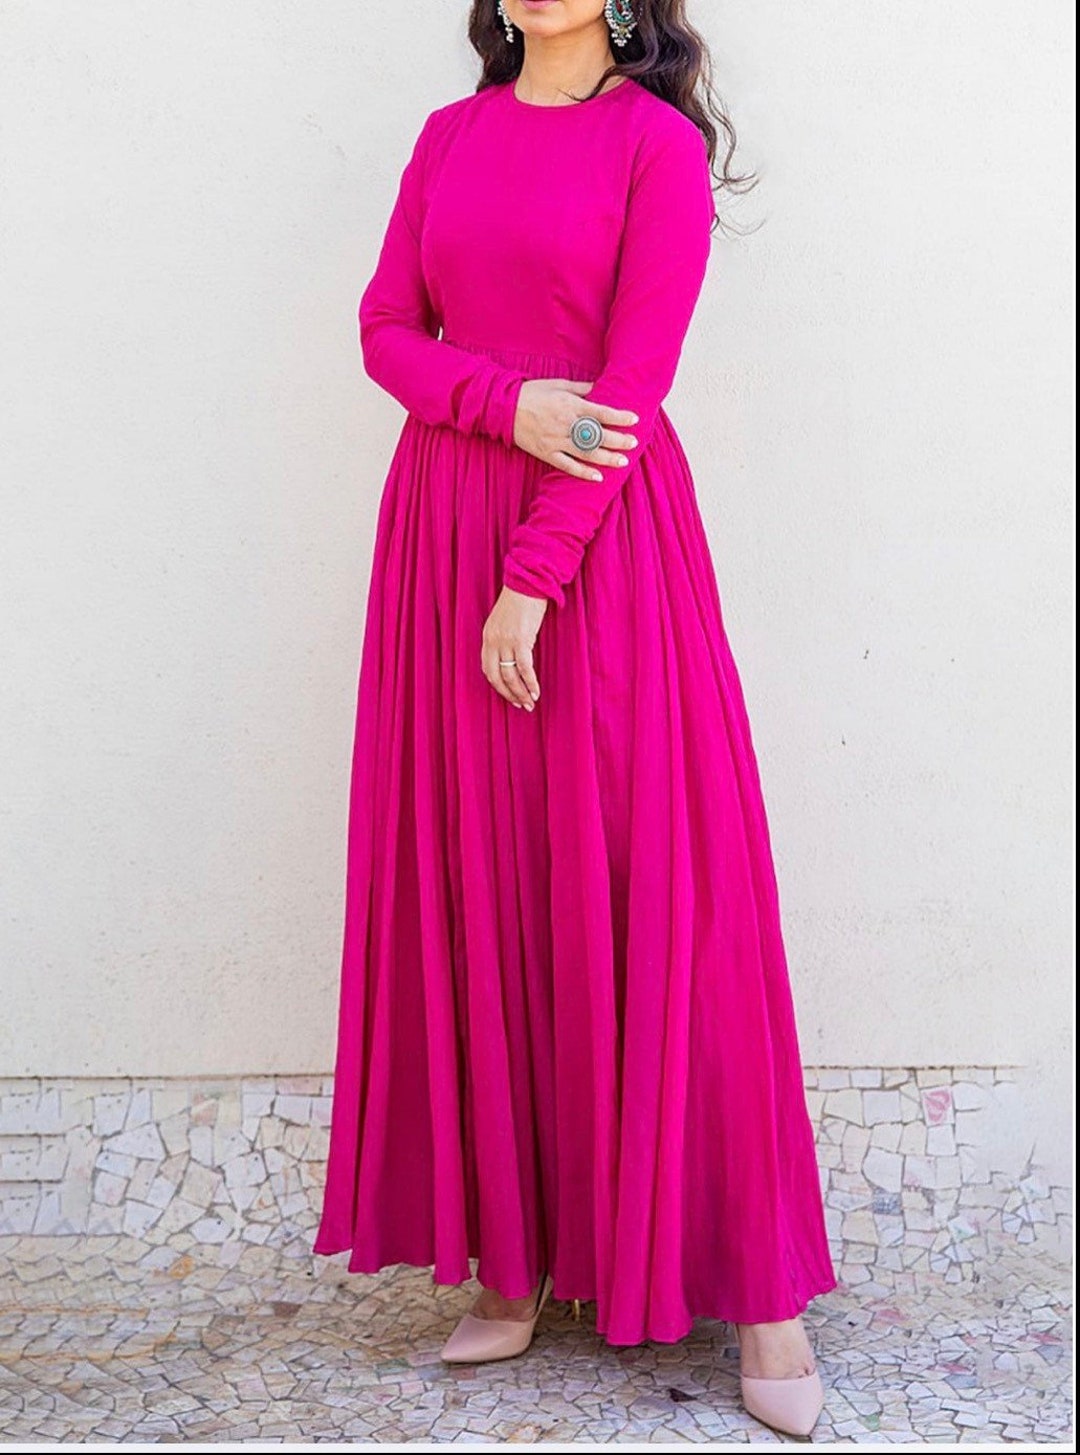 Hot Pink Magenta Anarkali Dress Salwar Kameez Indian Outfit